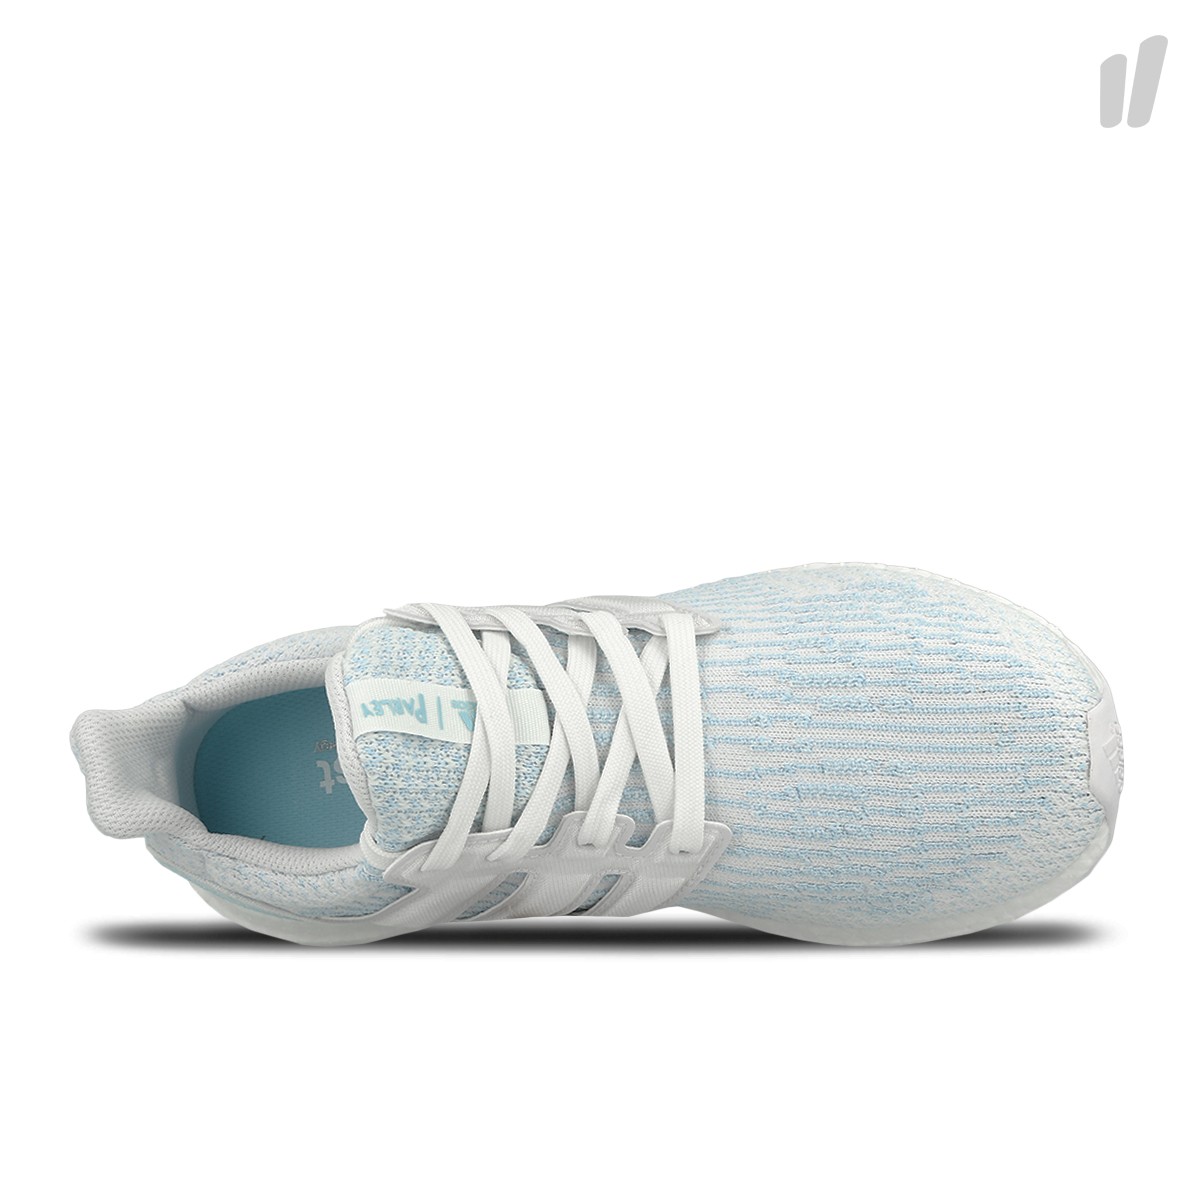 Adidas UltraBOOST Parley
Footwear White / Icey Blue